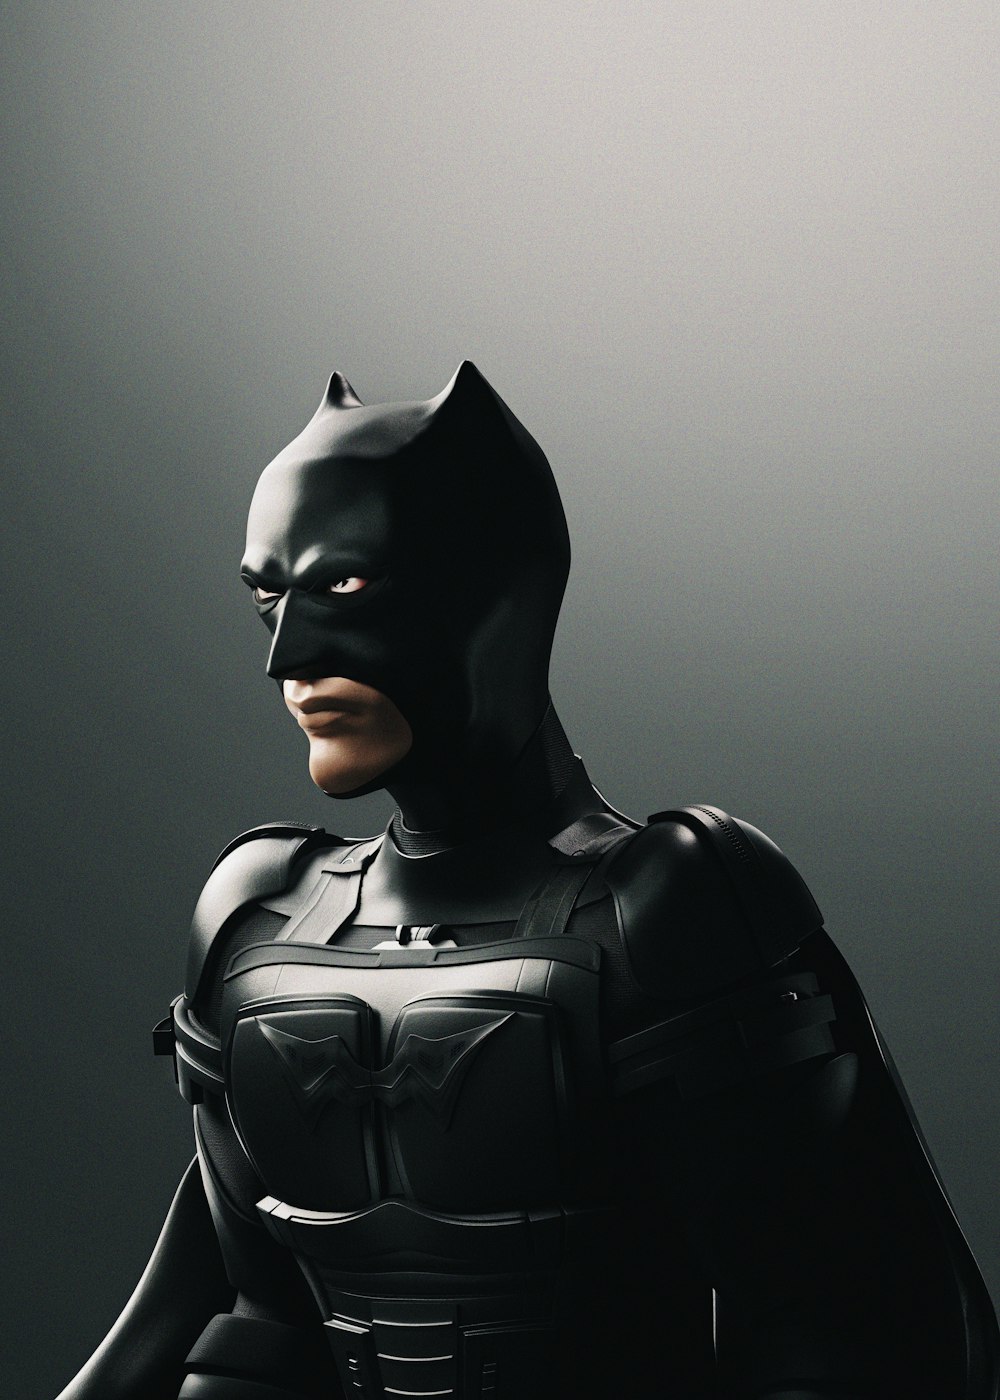 a close up of a person in a batman costume